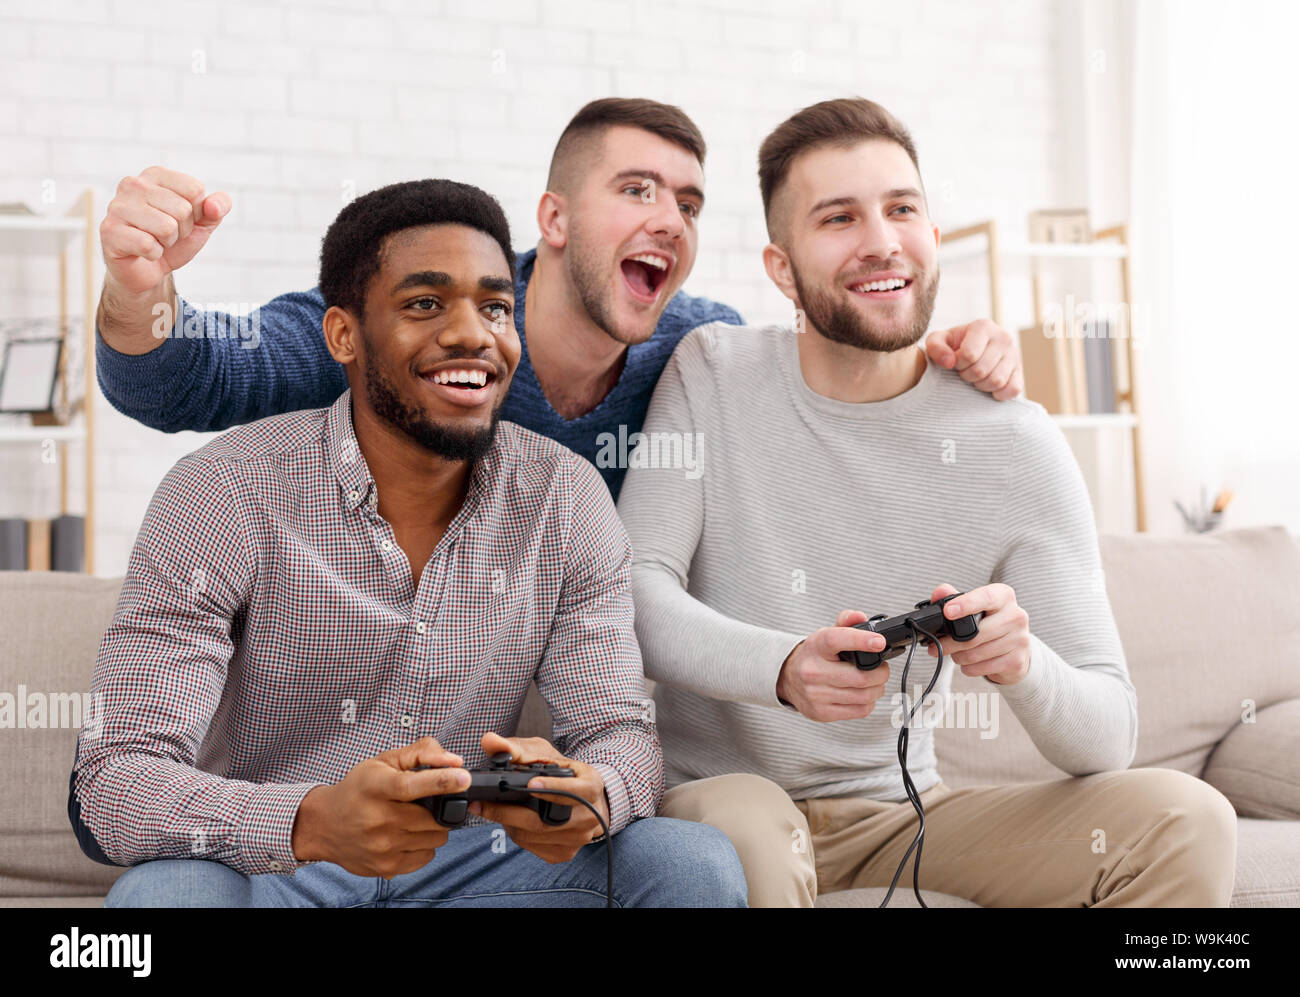 Diverse mates playing video games, holding joysticks Stock Photo